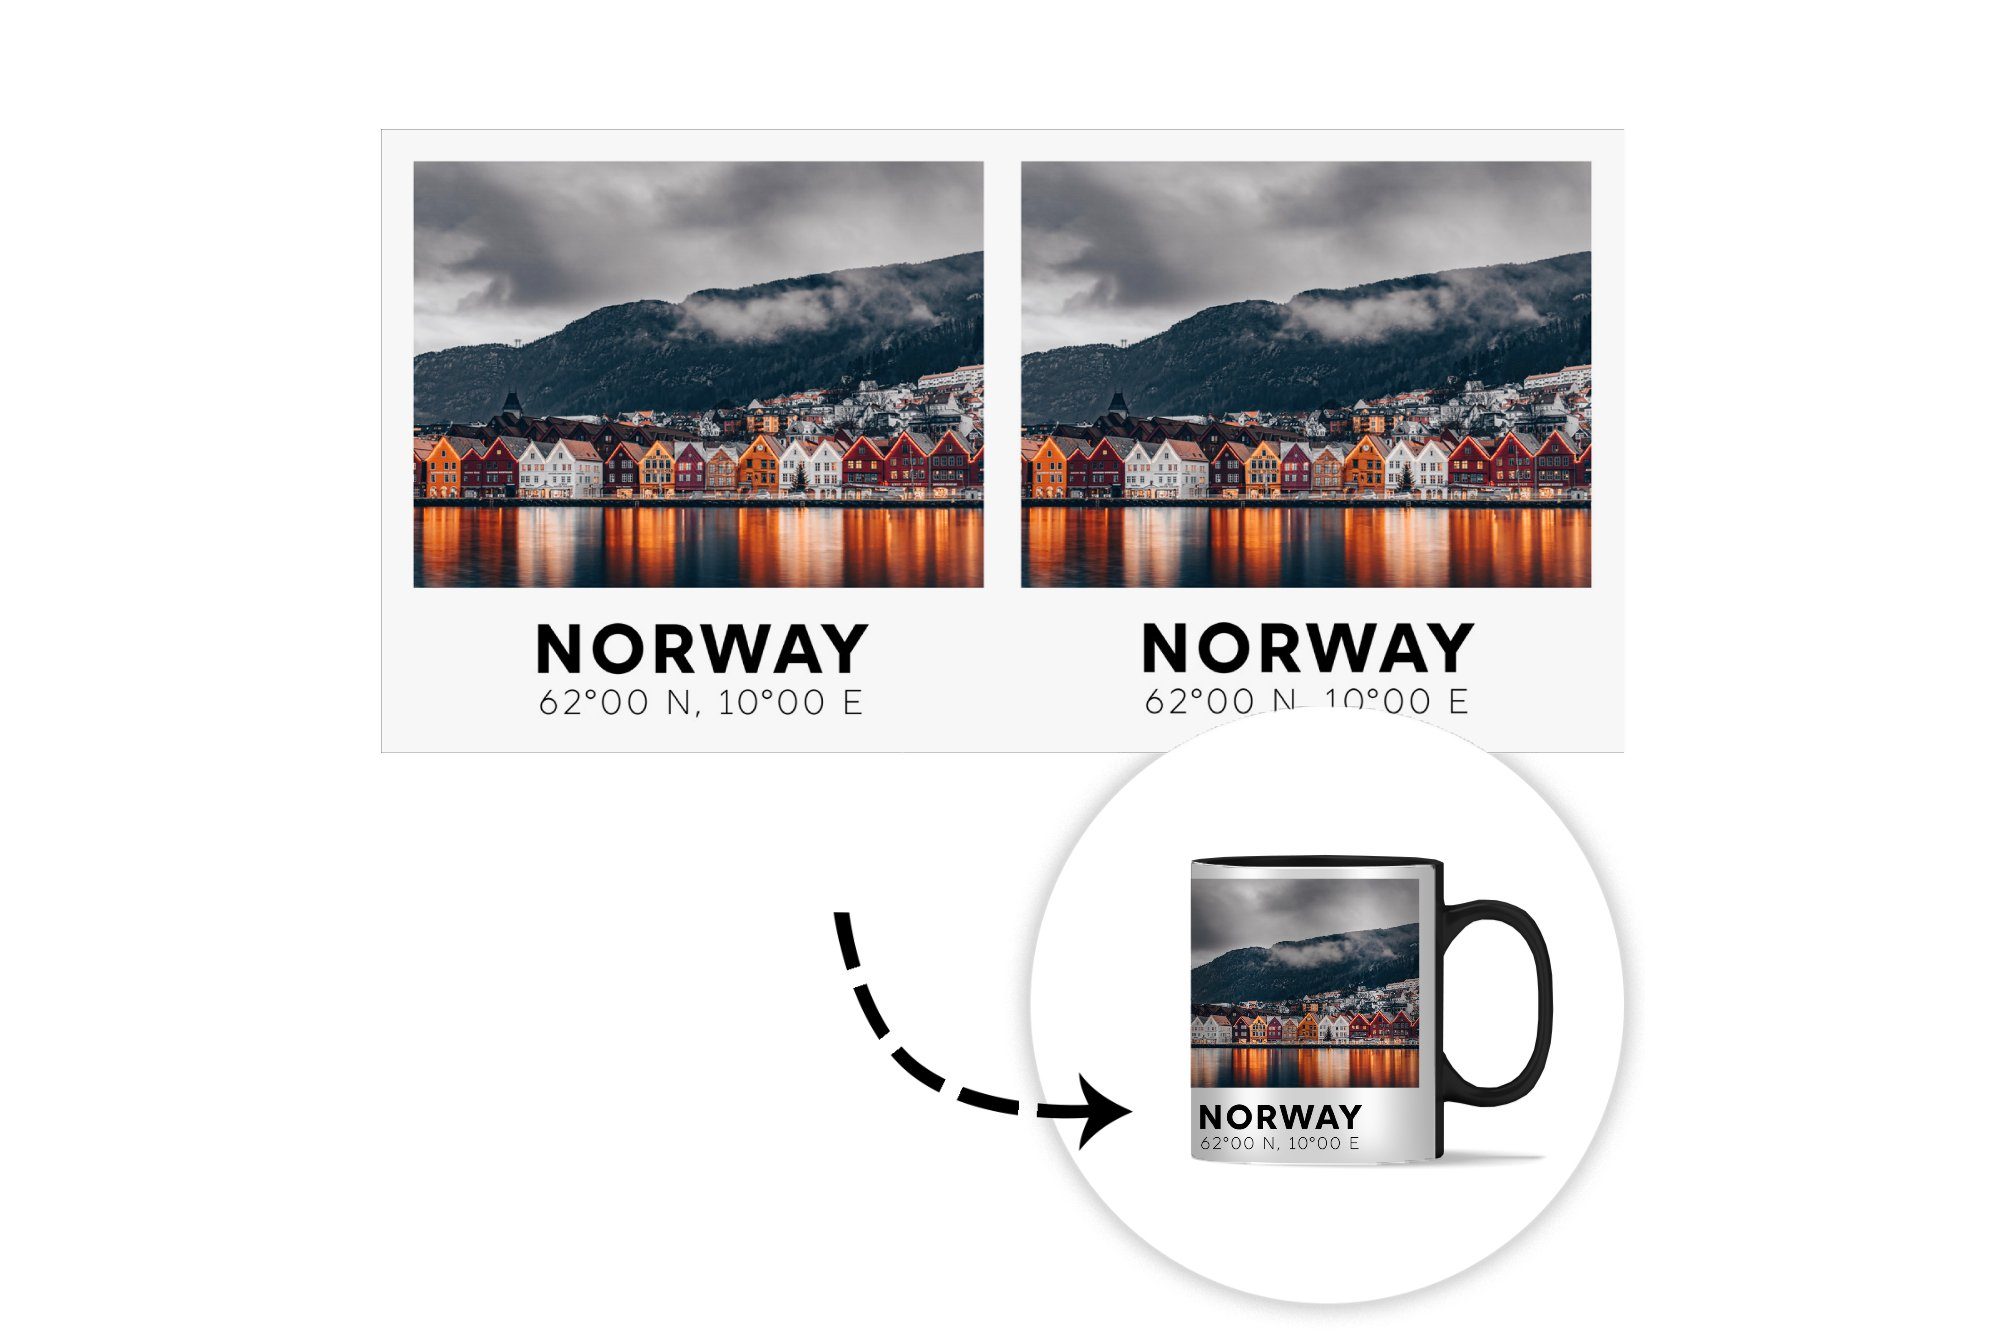 MuchoWow Tasse Norwegen - Skandinavien Farbwechsel, Zaubertasse, Geschenk Teetasse, - Kaffeetassen, Keramik, Bergen